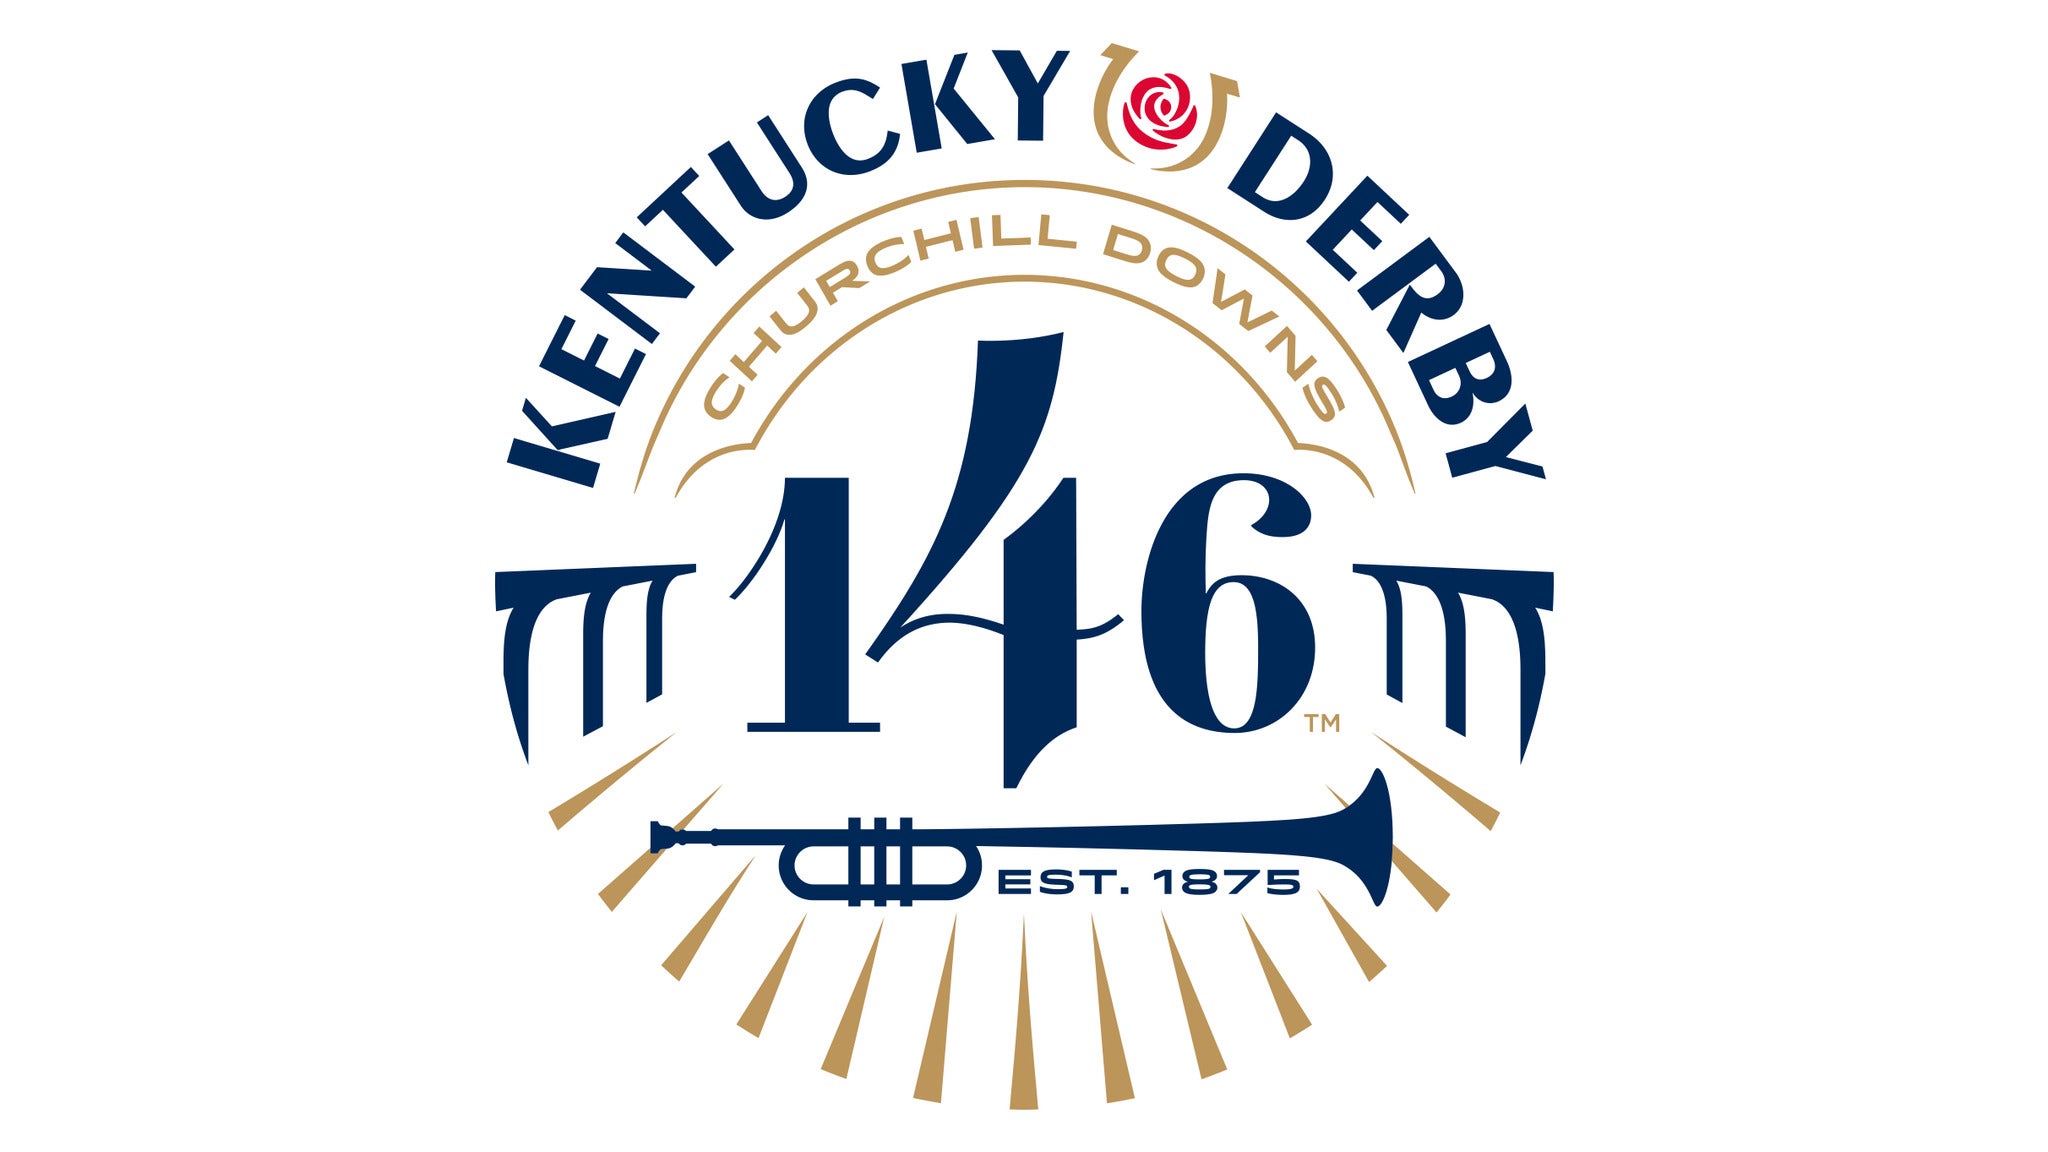 144th Kentucky Derby & Kentucky Oaks  - Reserved Seating Plan in Louisville promo photo for Postsale Offer 3 presale offer code